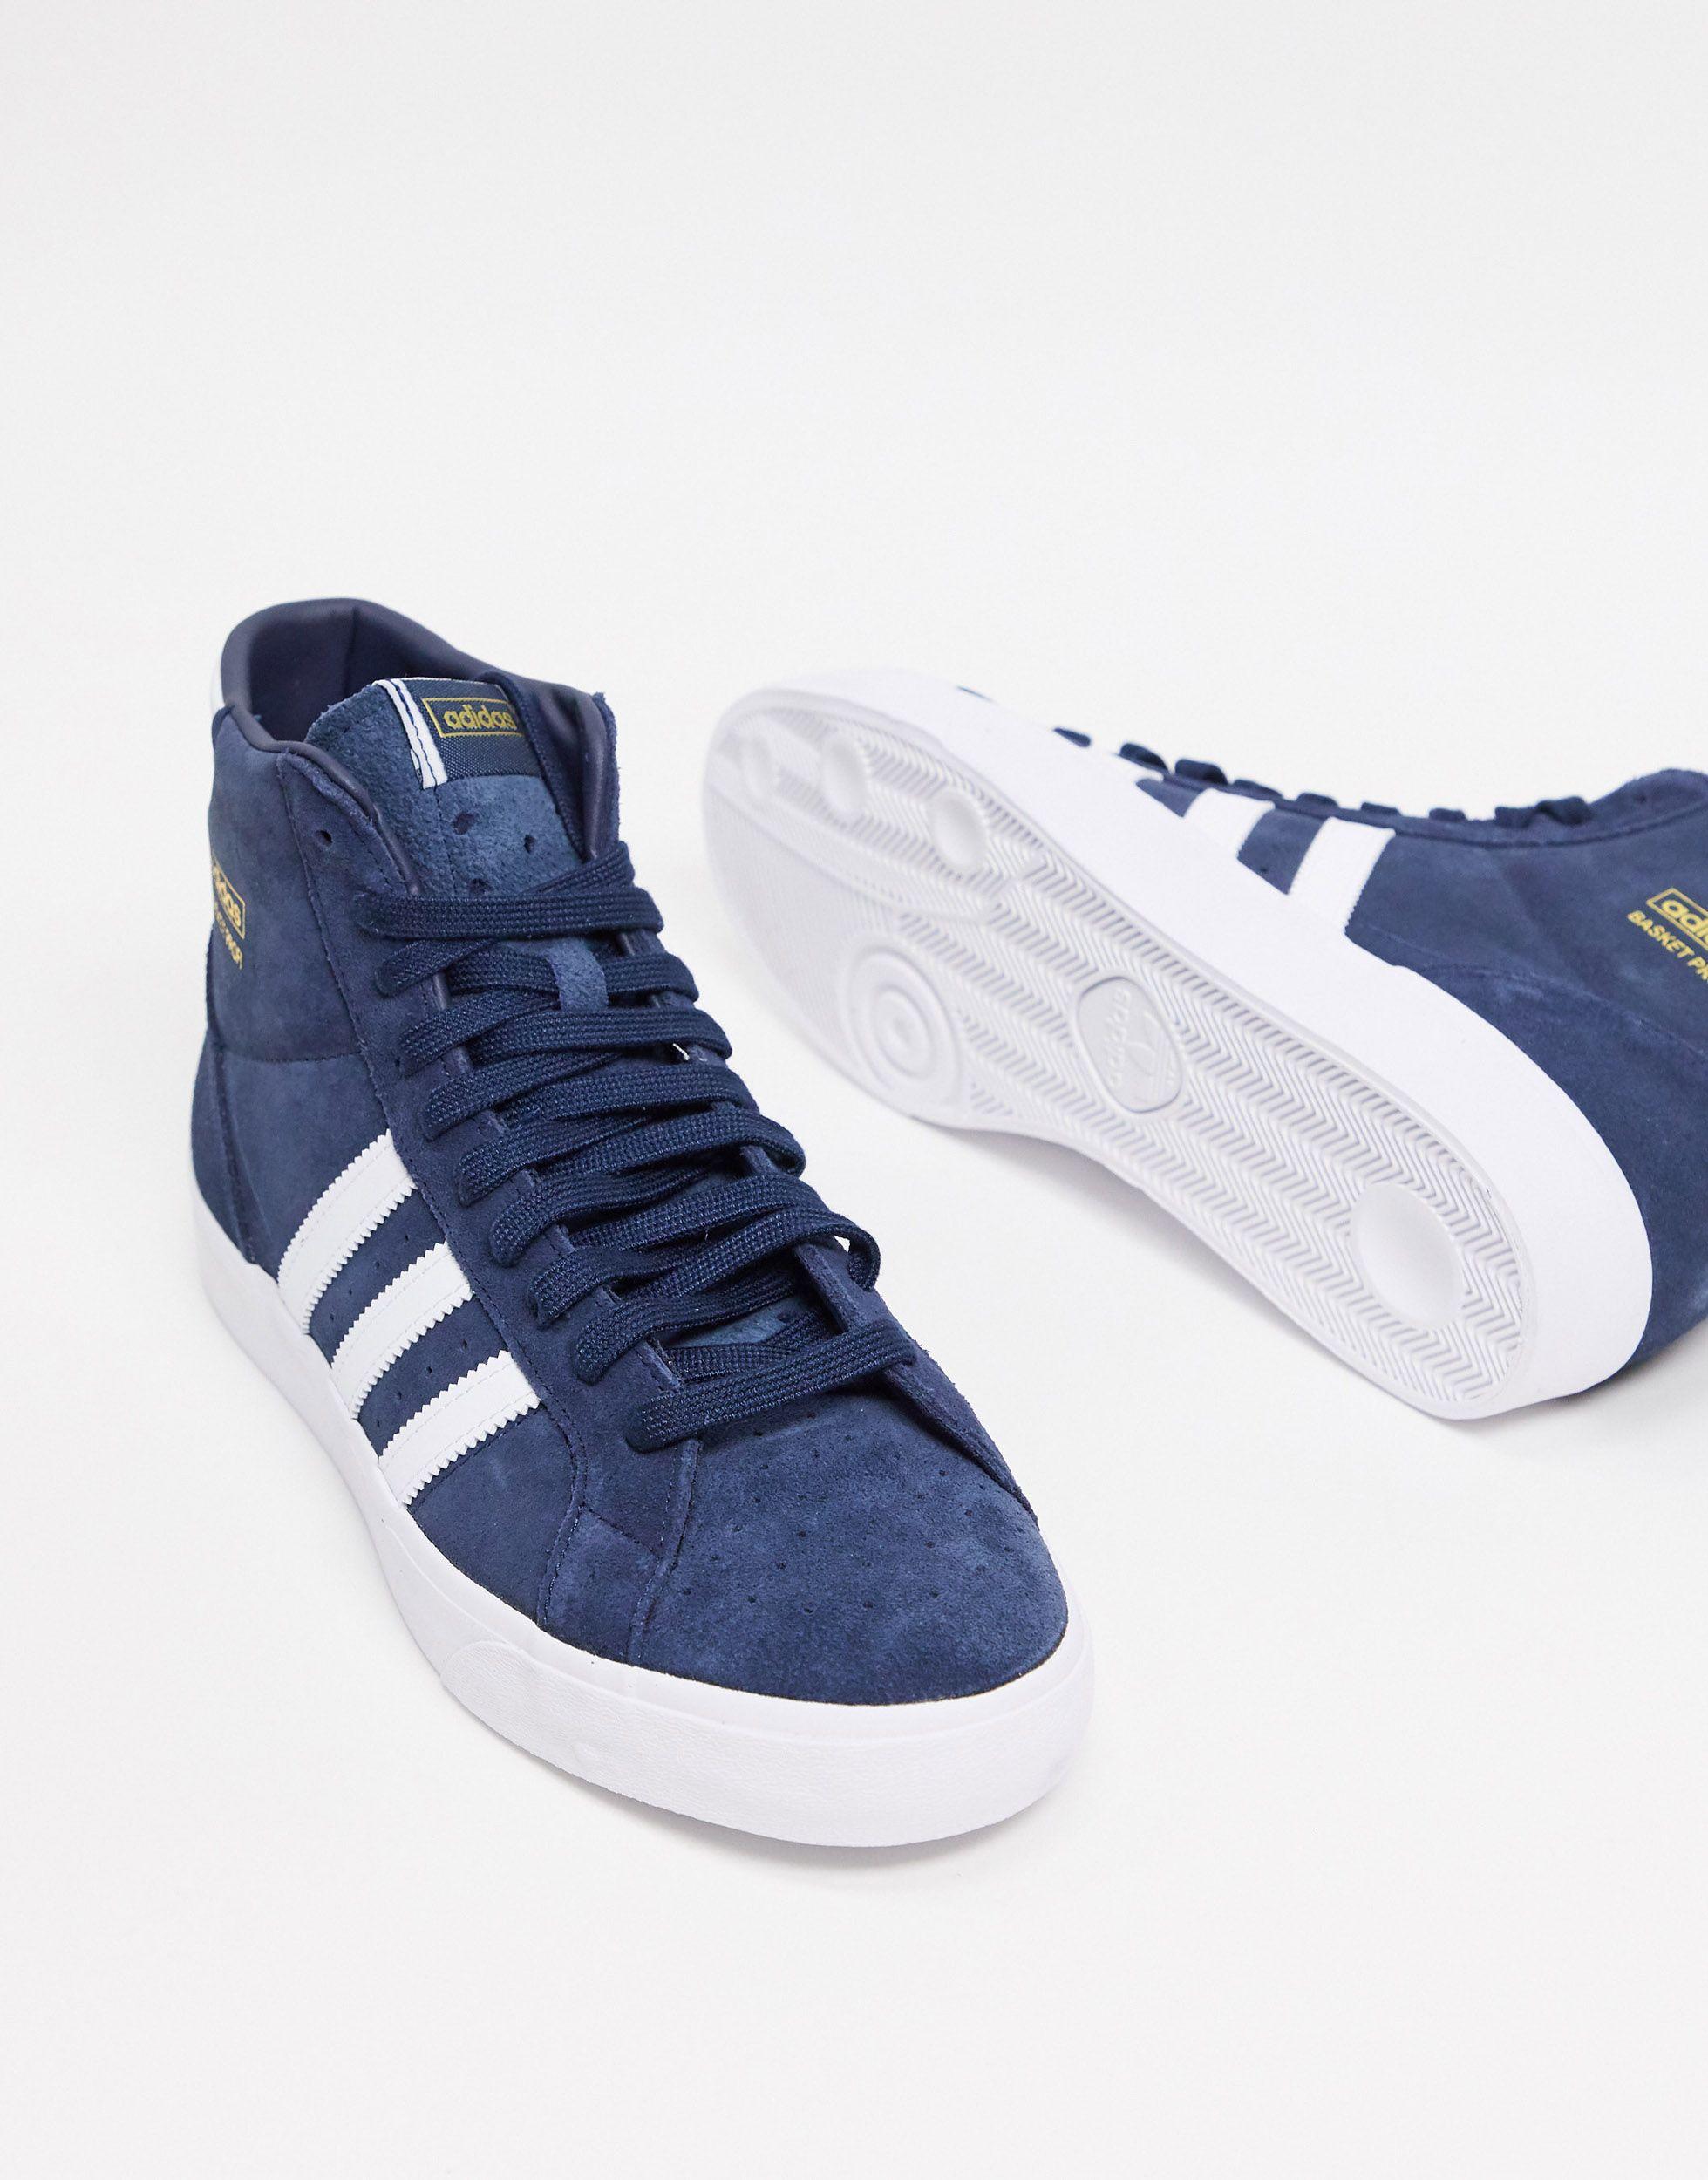 adidas Originals Suede Basket Profi in Navy/White/Gold Metallic (Blue) for  Men | Lyst